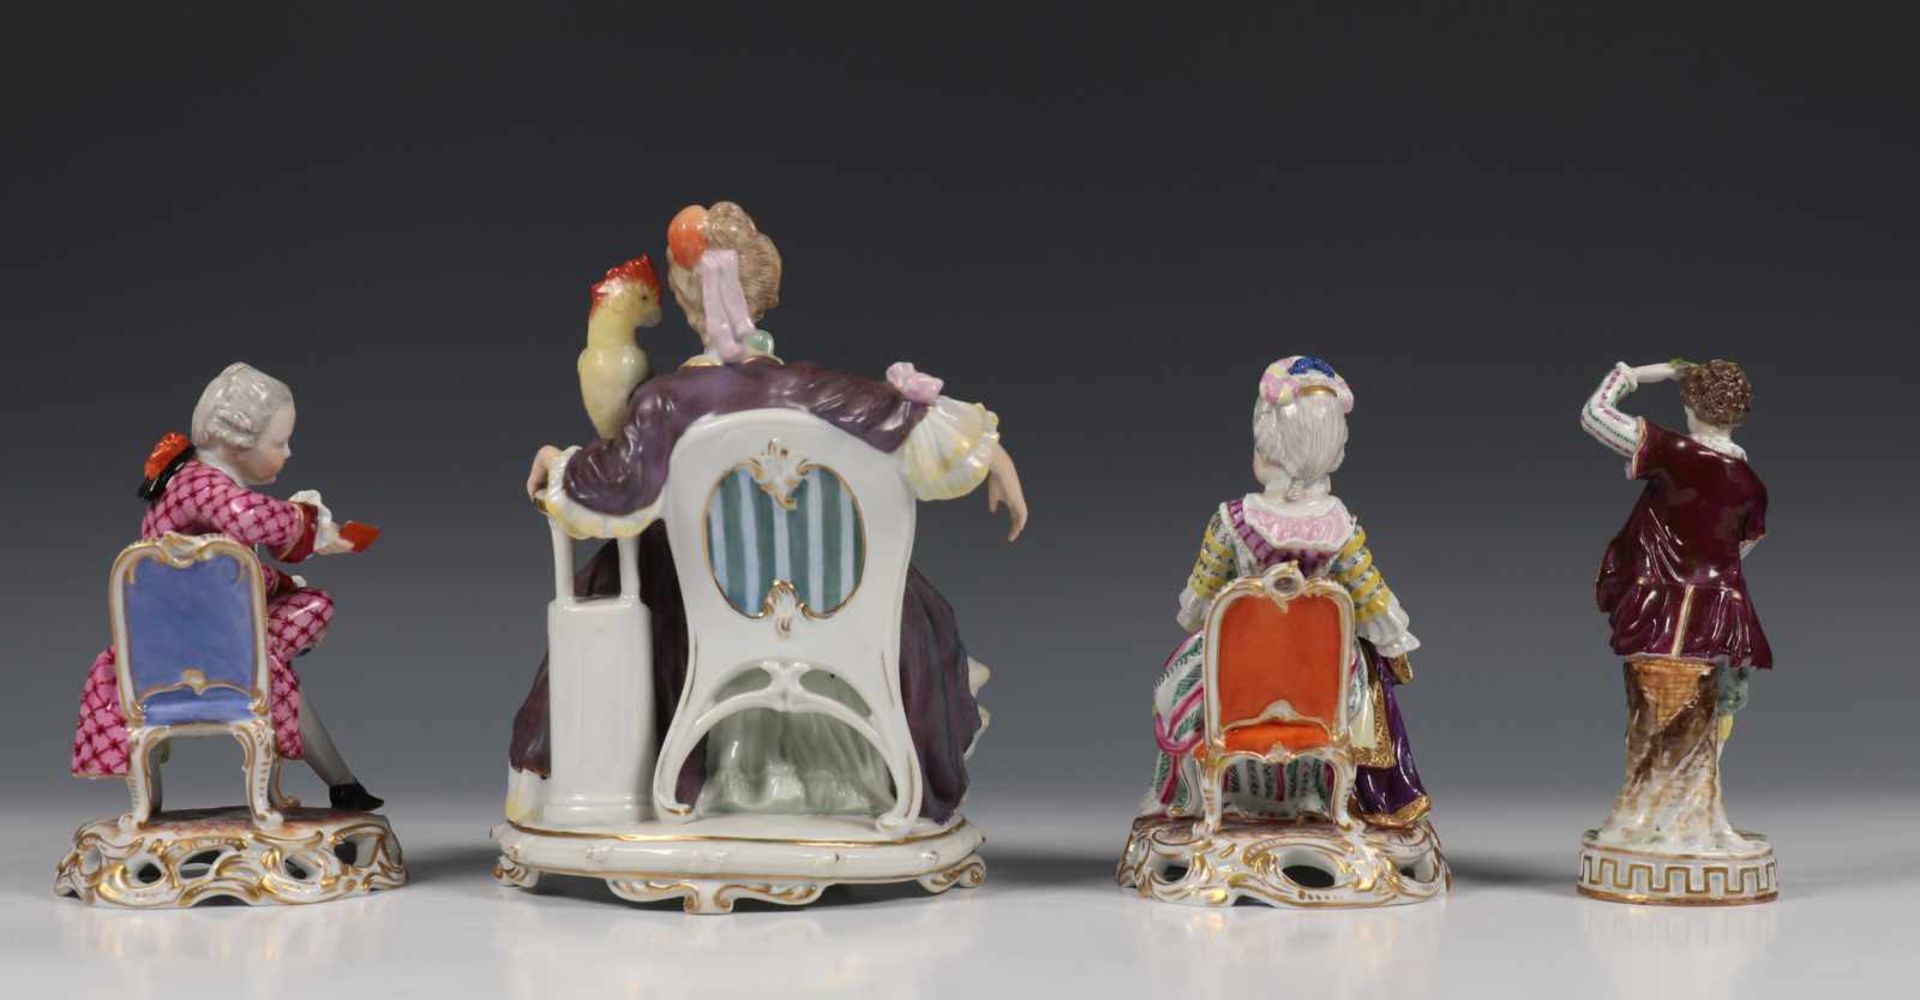 Thüringen, vier porseleinen groepen, begin 20e eeuwFiguren op stoel in 18e eeuwse kledij, h. 14-19 - Bild 2 aus 3